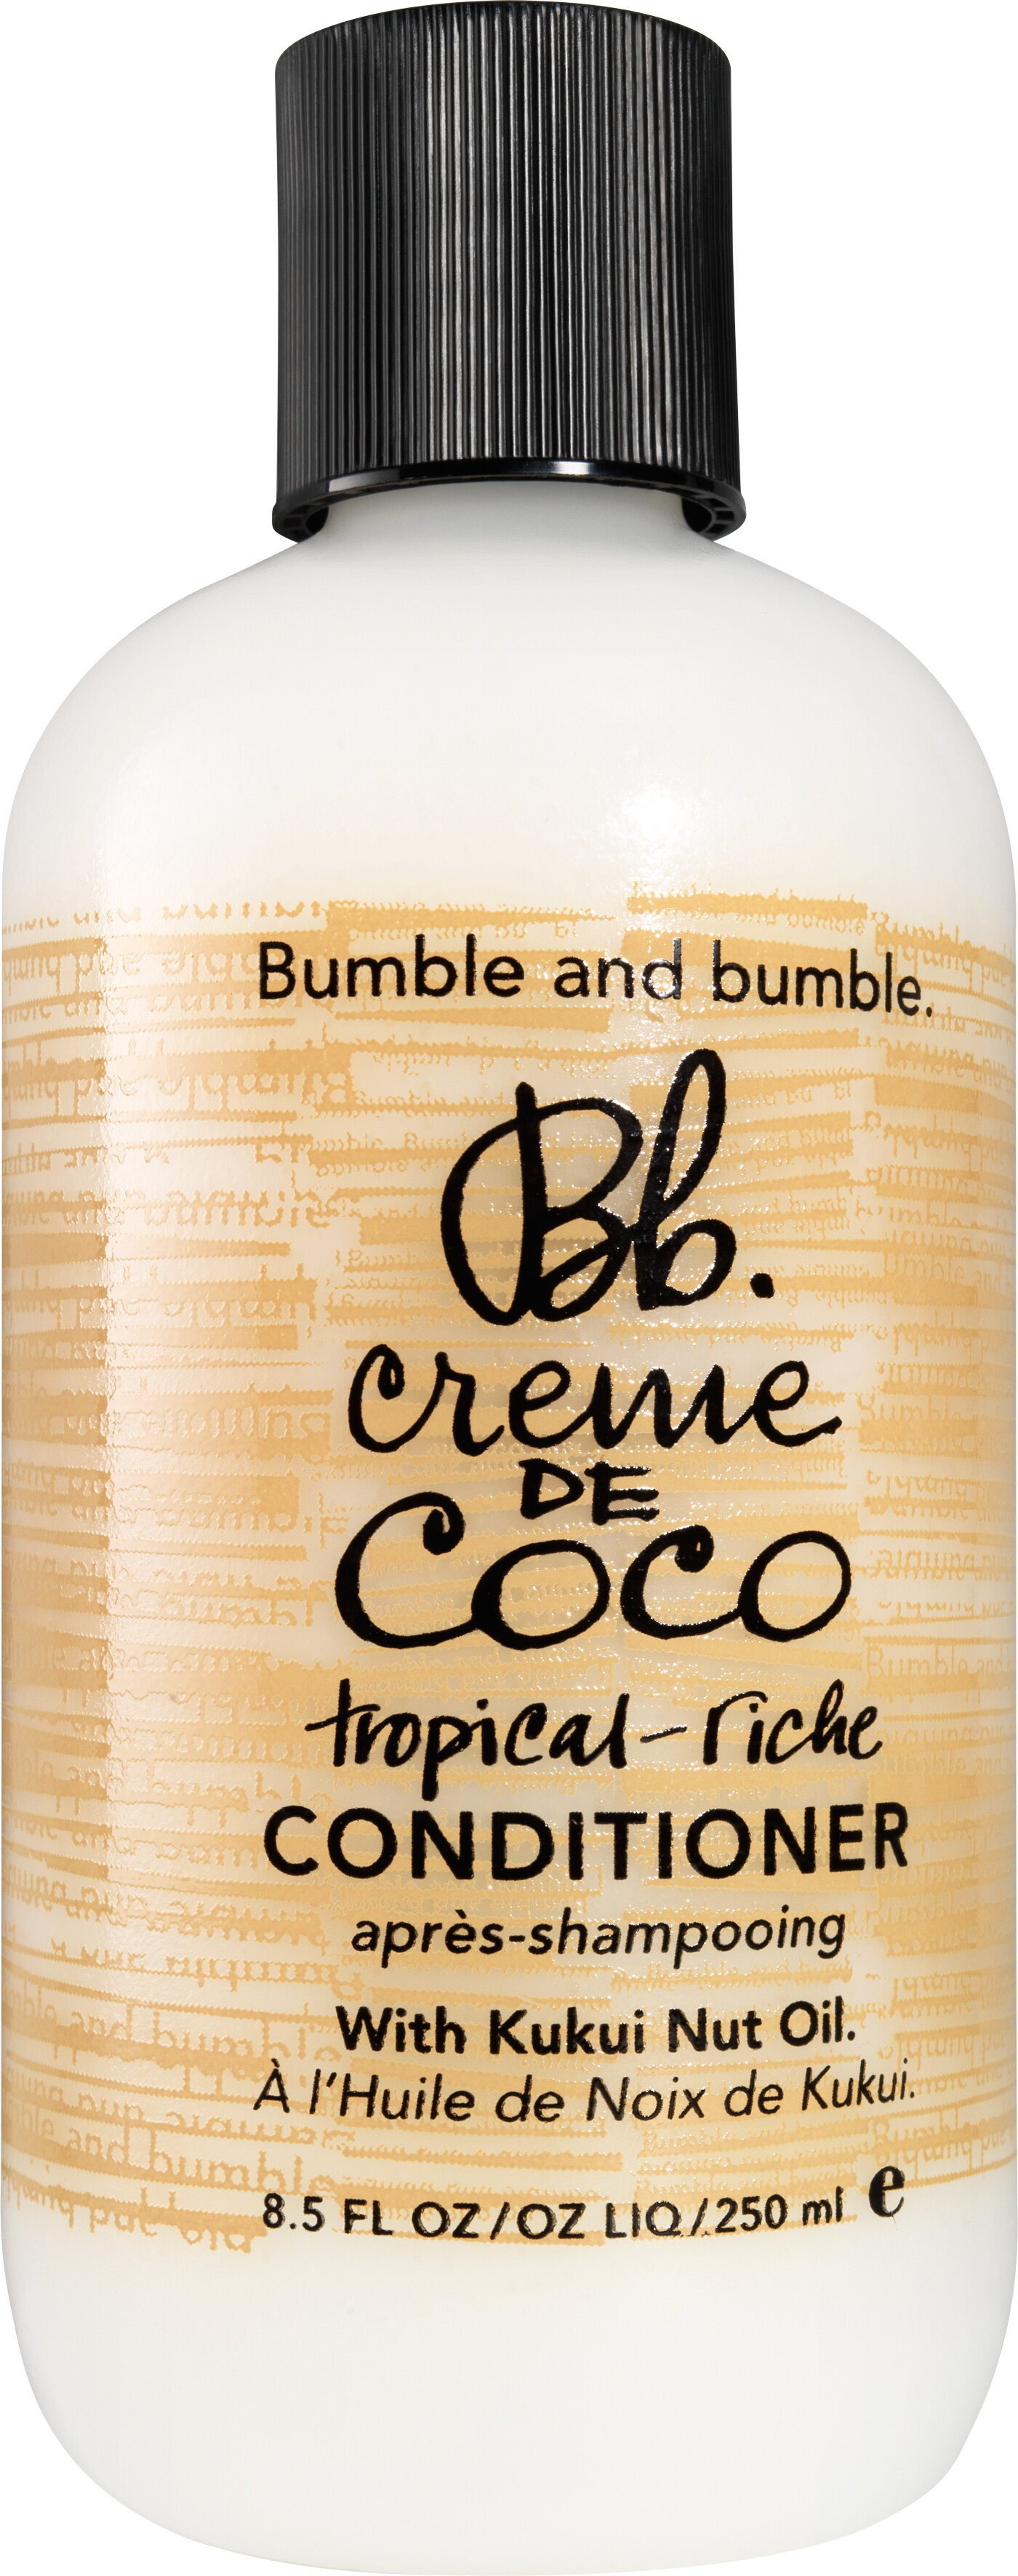 Bumble and bumble Creme de Coco Tropical-Riche Conditioner 250ml